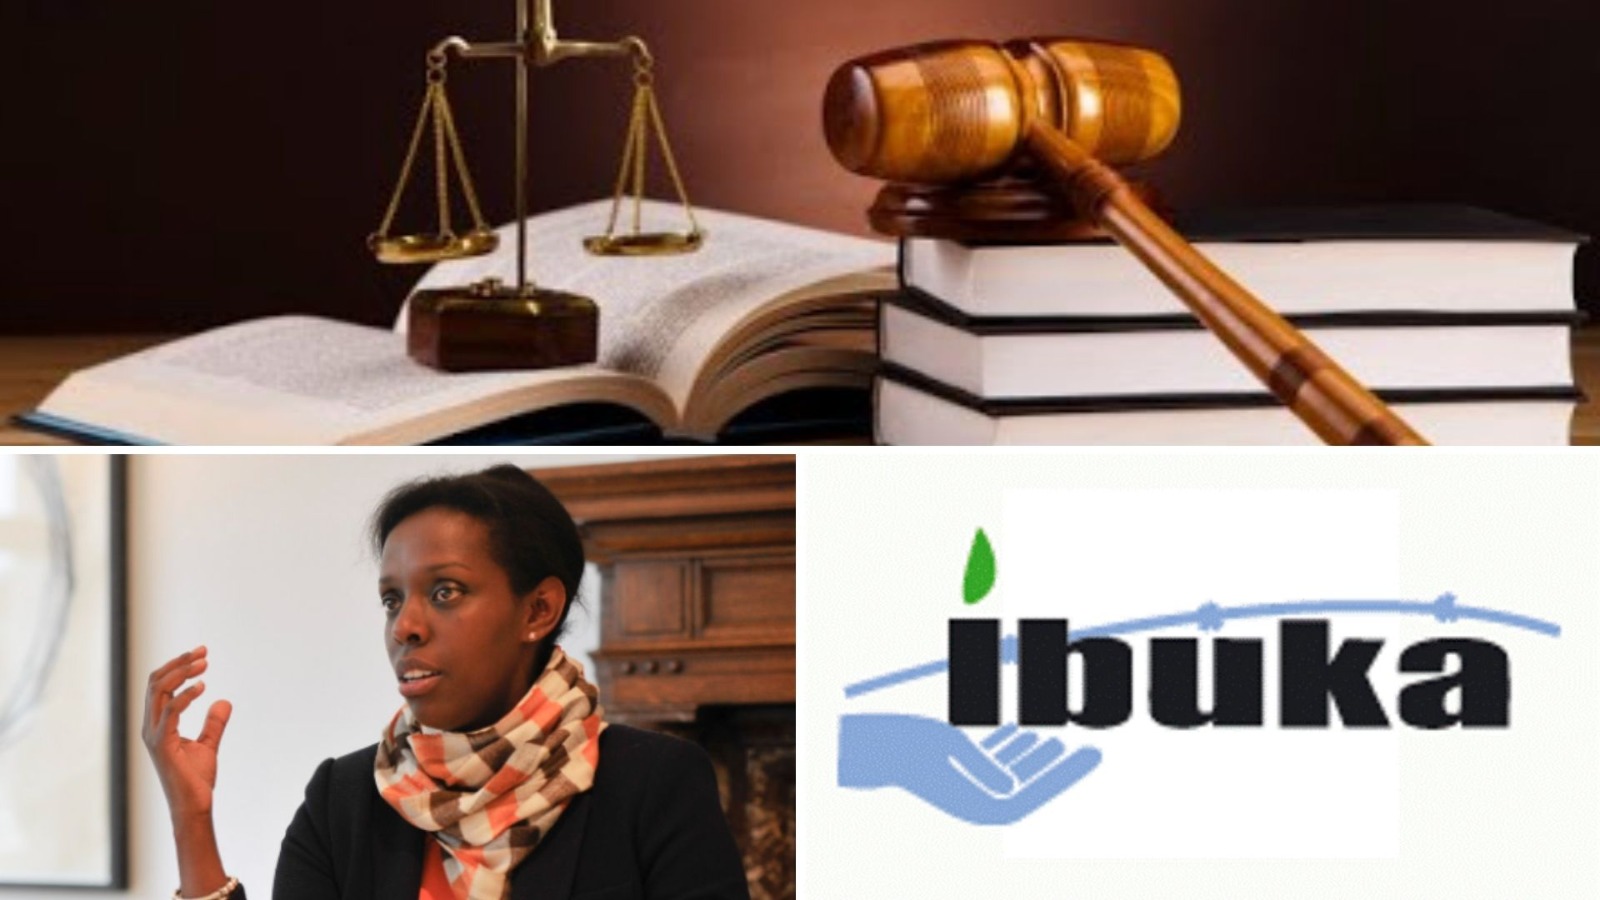 IBUKA-Belgium - soon to be dissolved by Belgian justice?